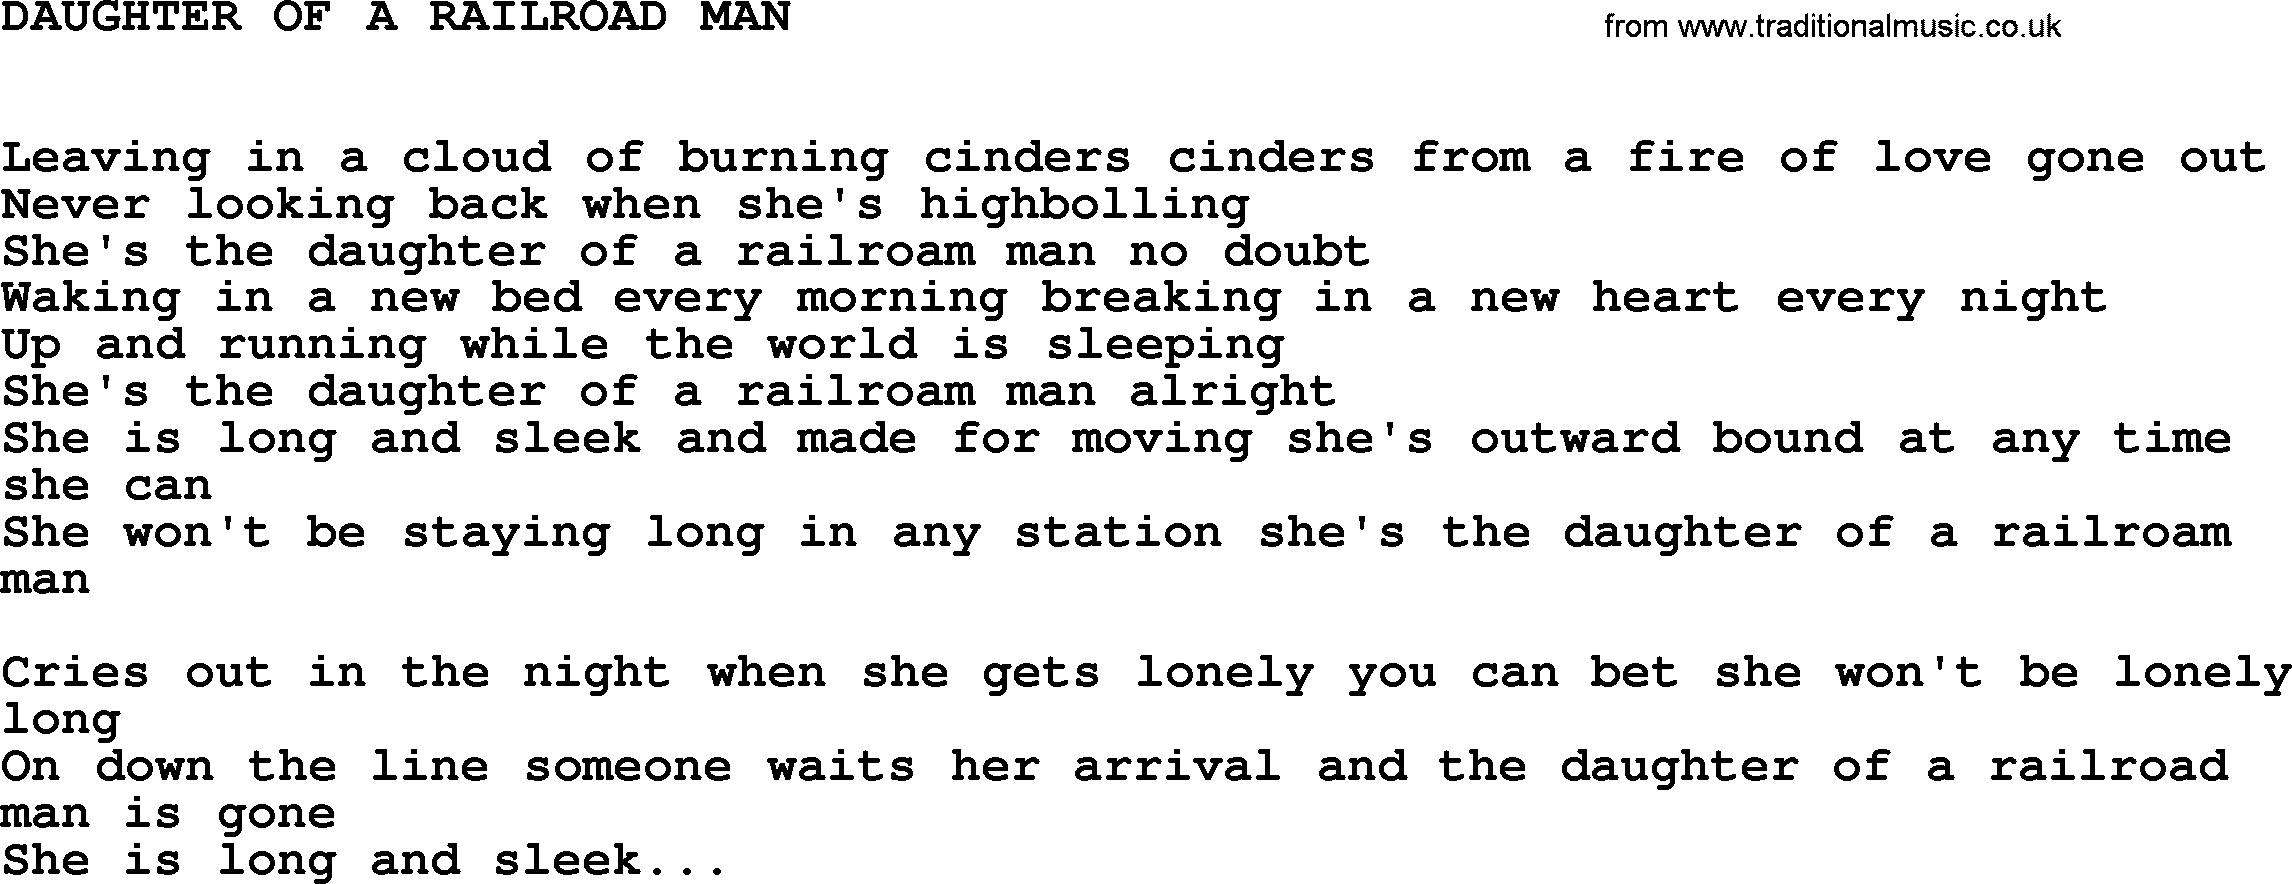 Johnny Cash song Daughter Of A Railroad Man.txt lyrics